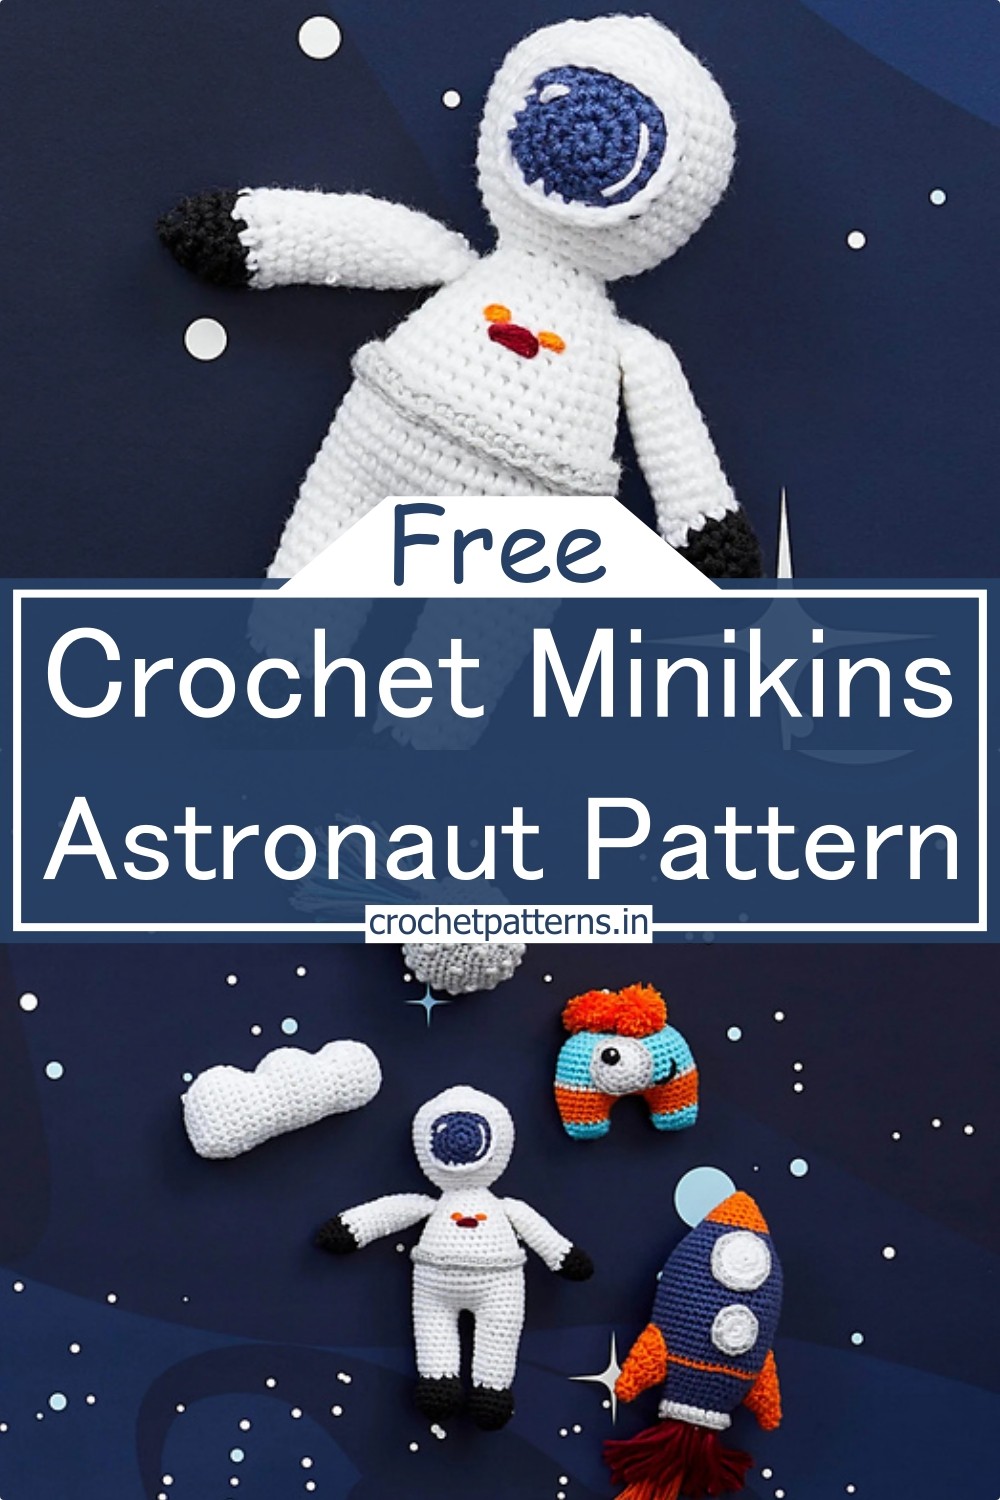 Crochet Minikins Astronaut Pattern